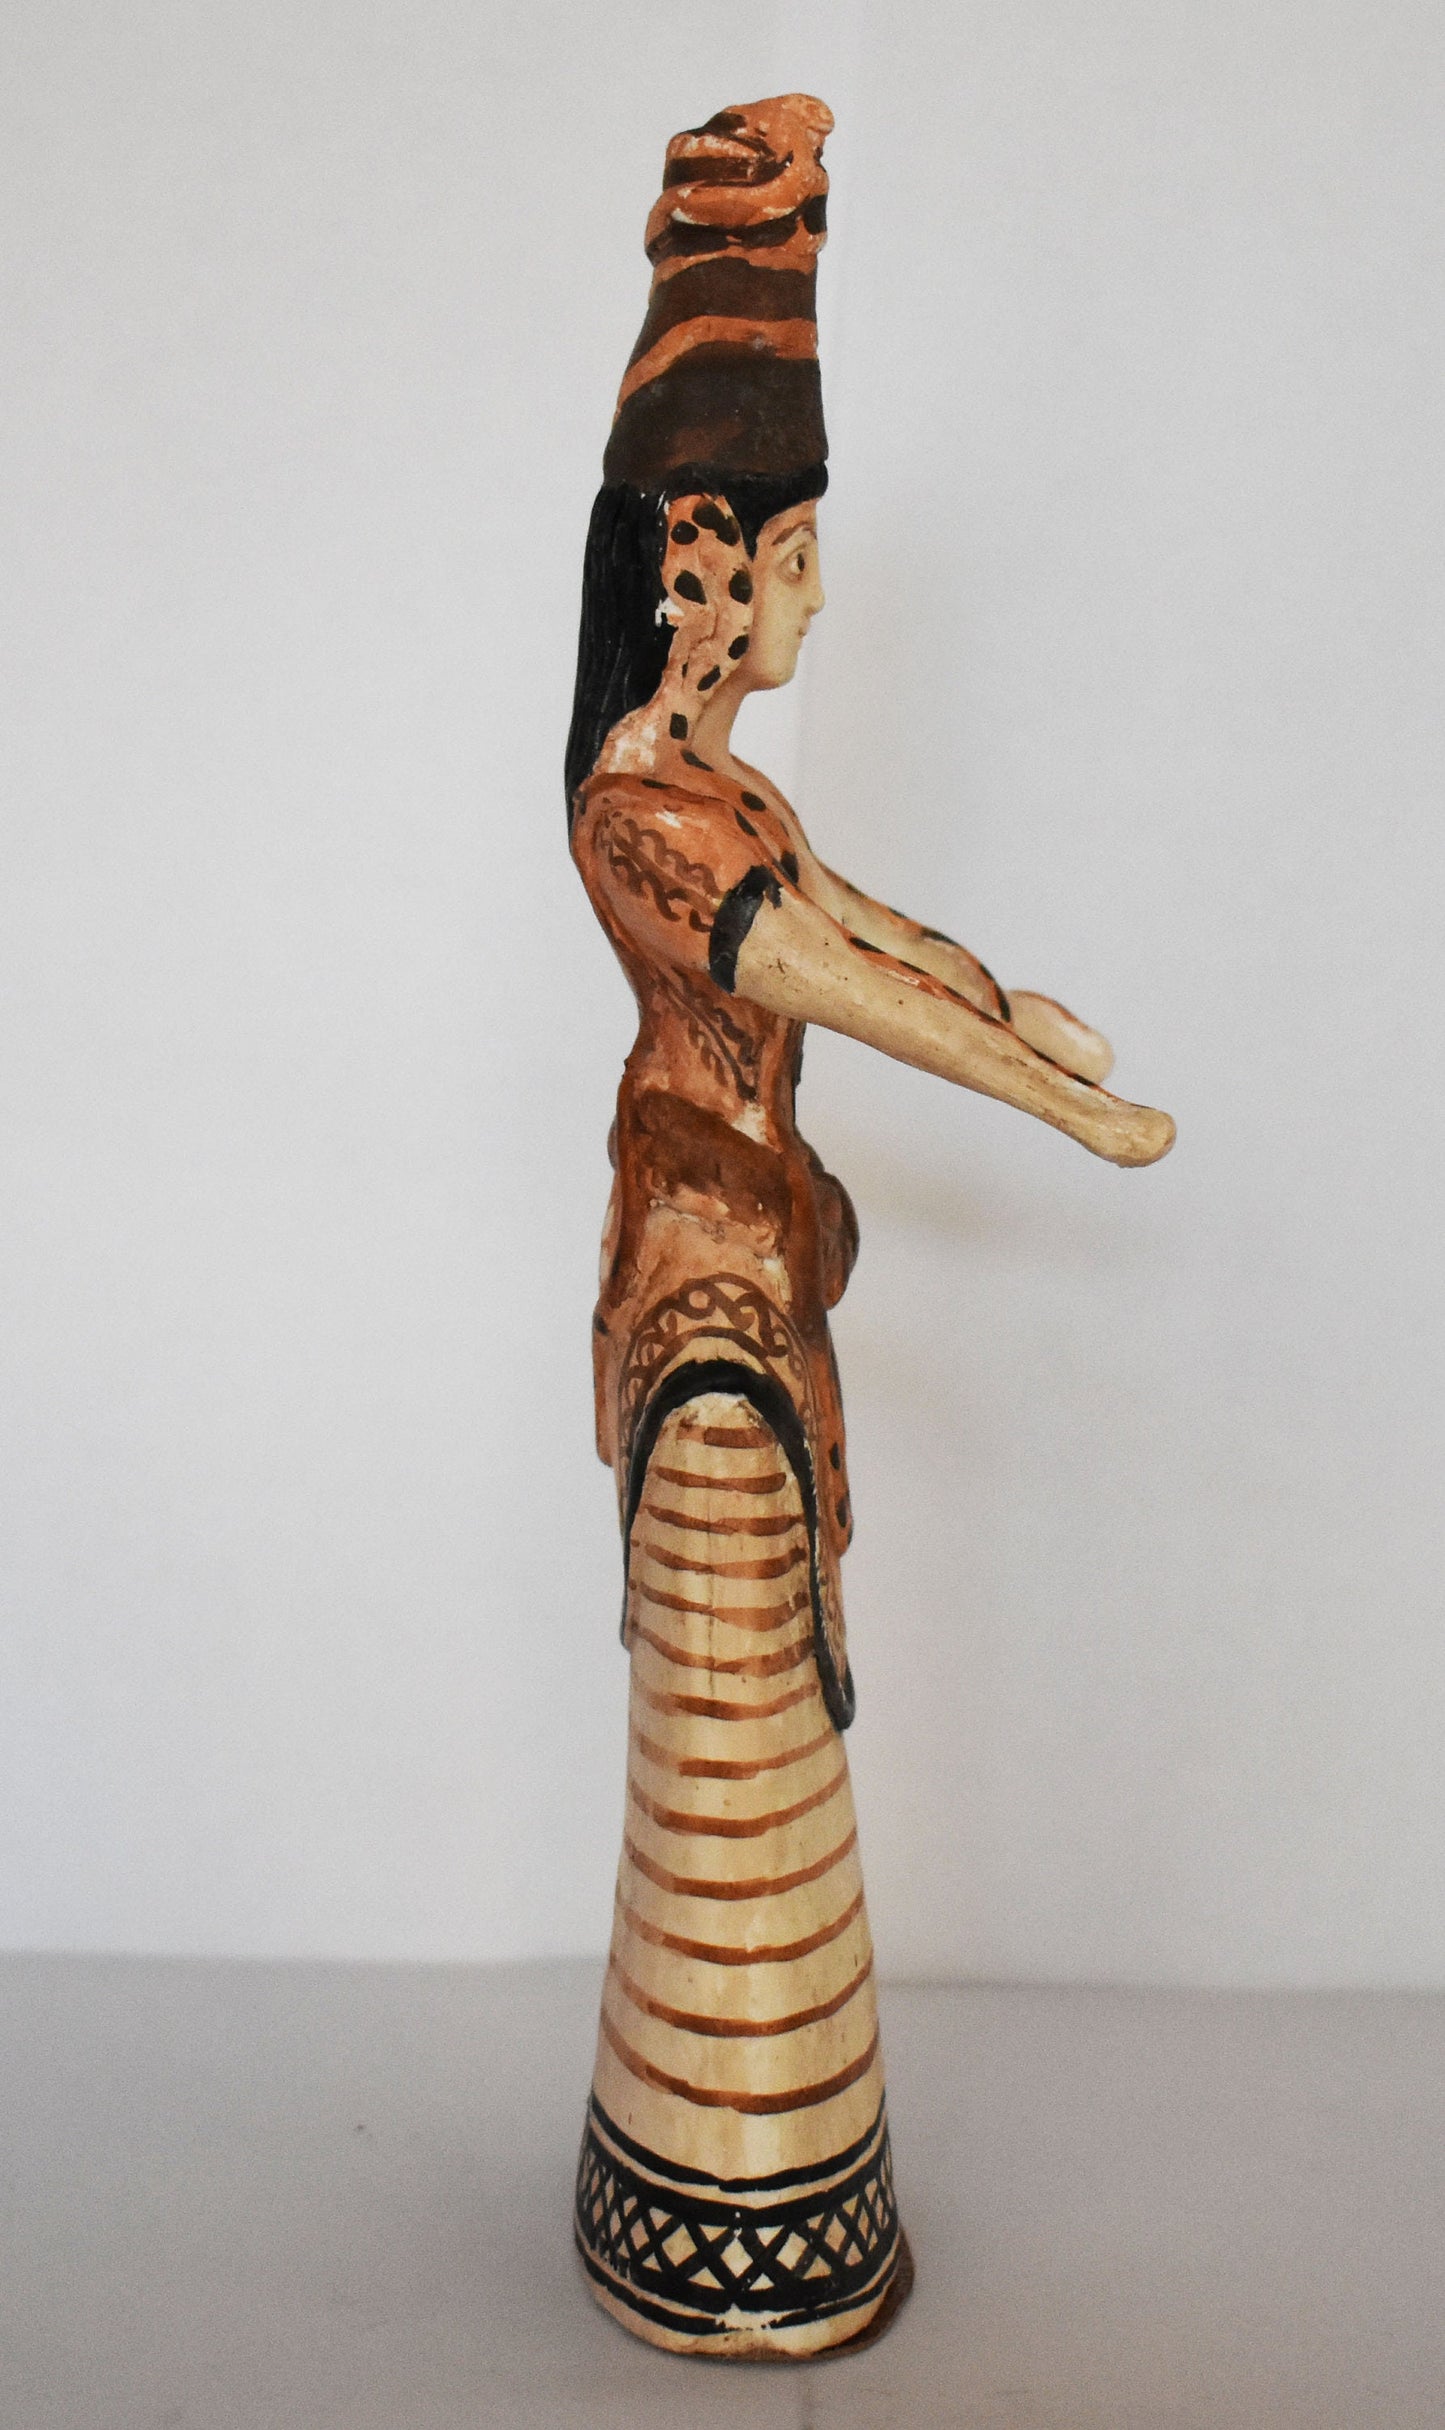 Snake Goddess - Chtonic Aspects - Symbol of the Underworld, Fertility and Sexuality - Bronze Age - Minoan Civilization - Ceramic Artifact